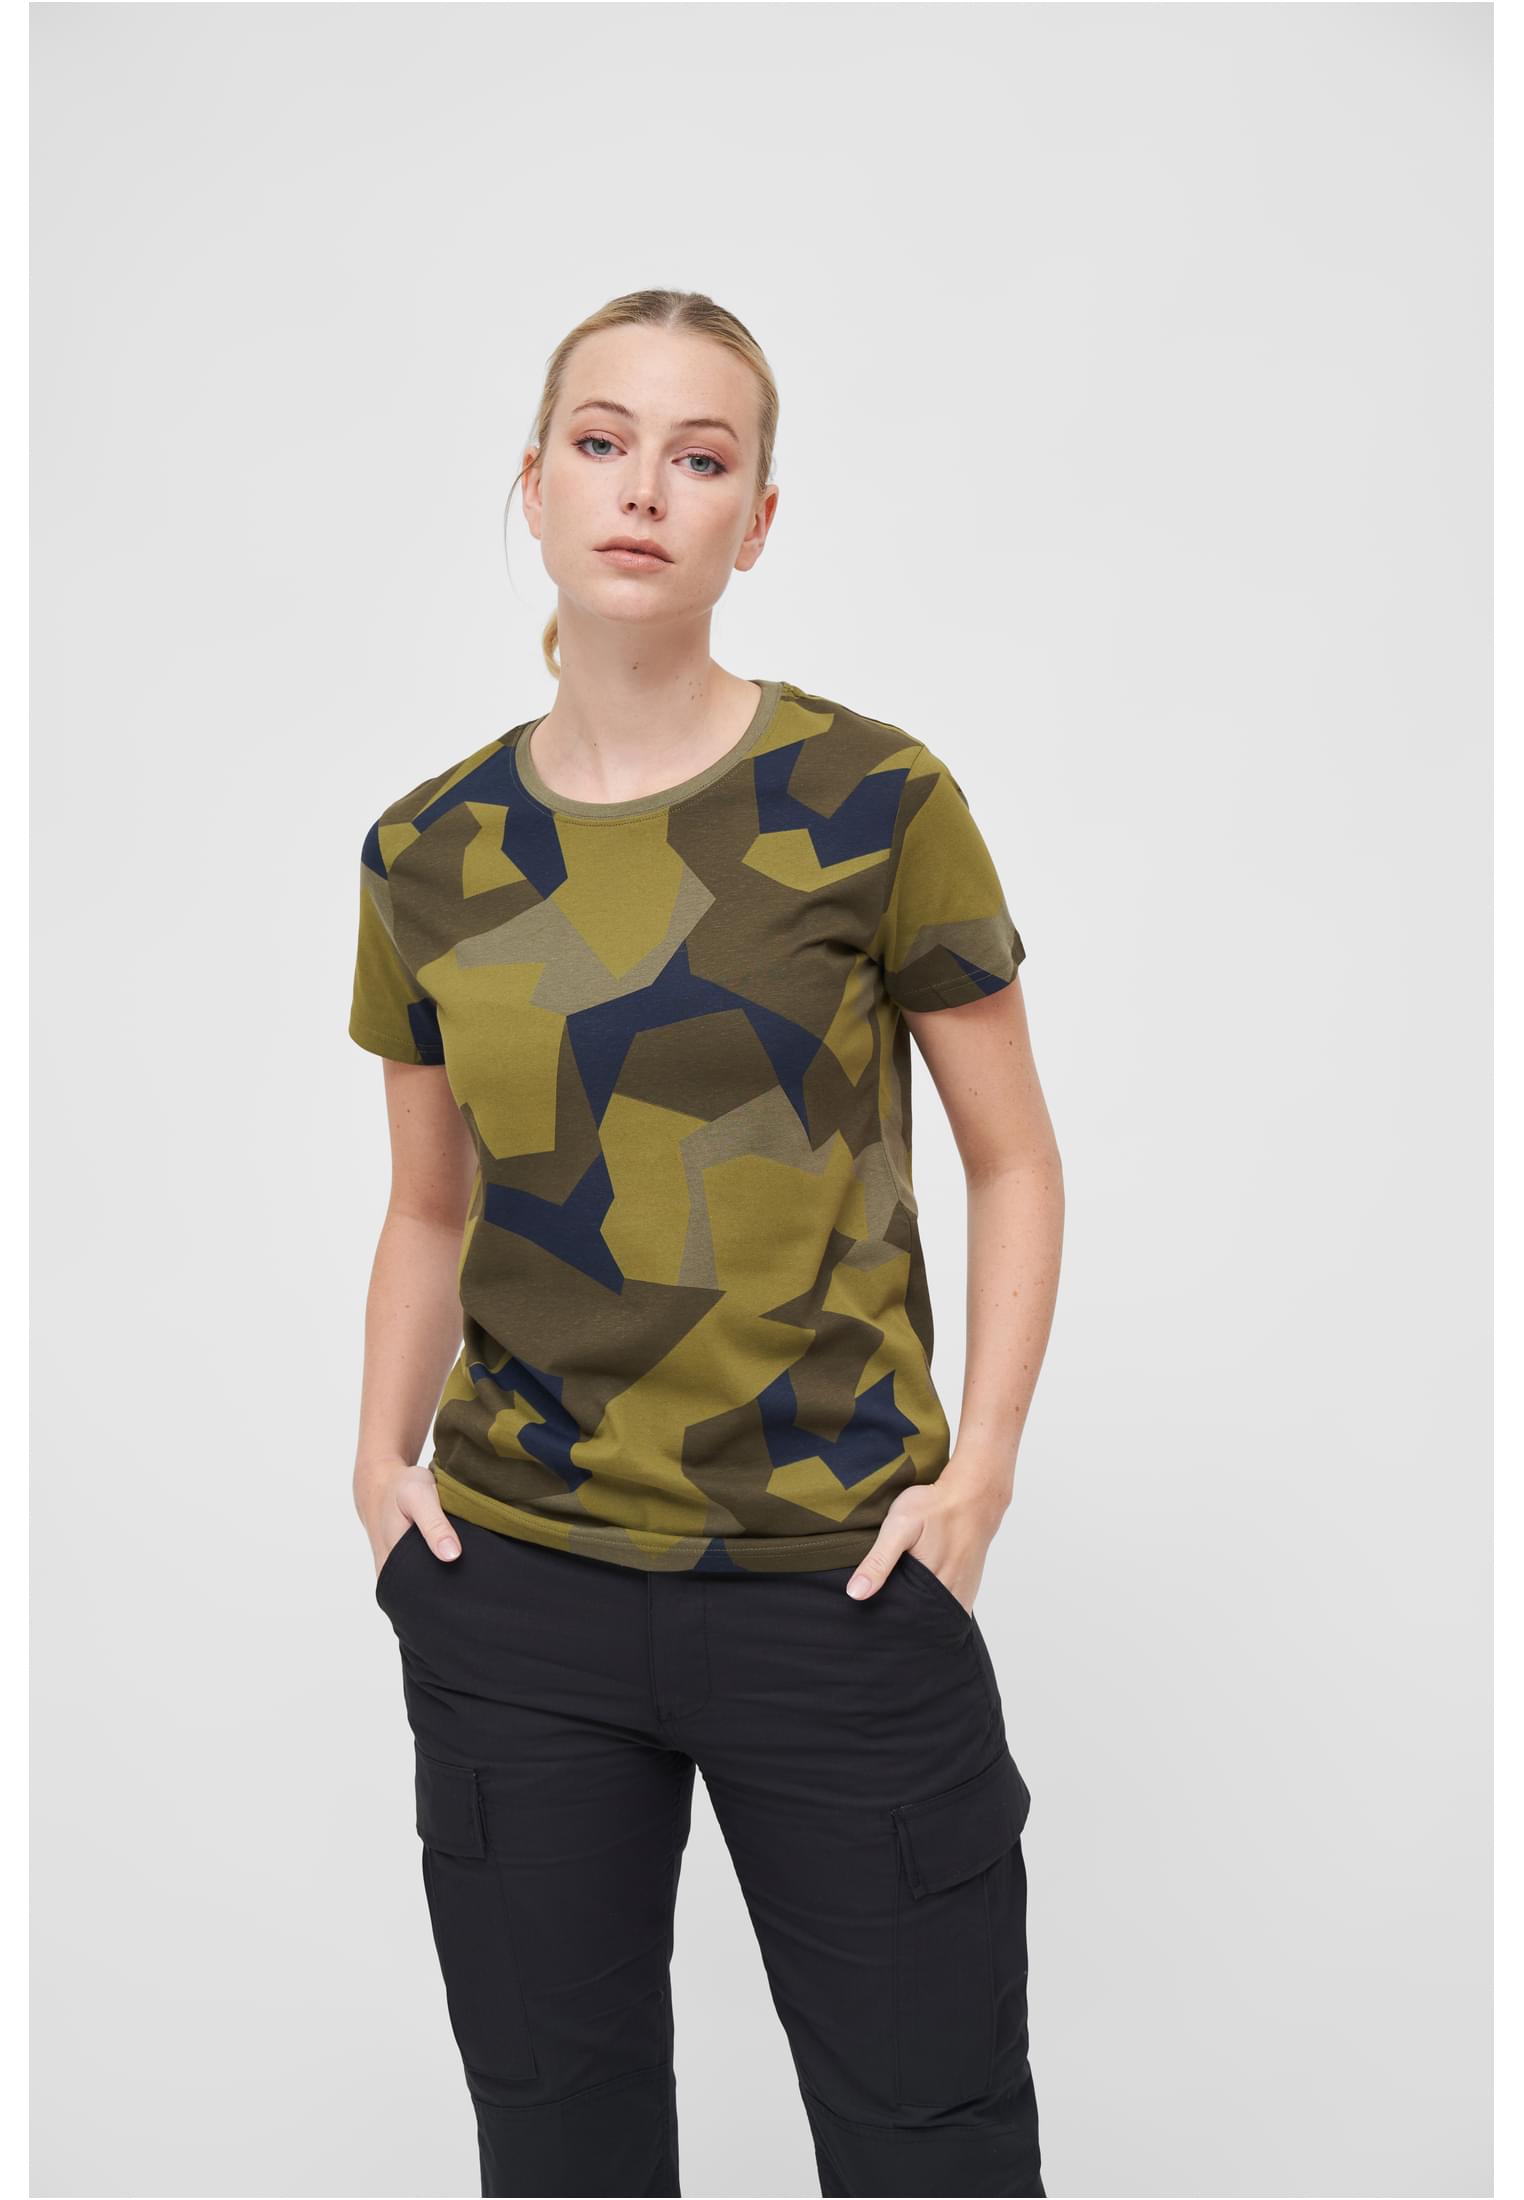 Women's T-shirt in Swedish camouflage